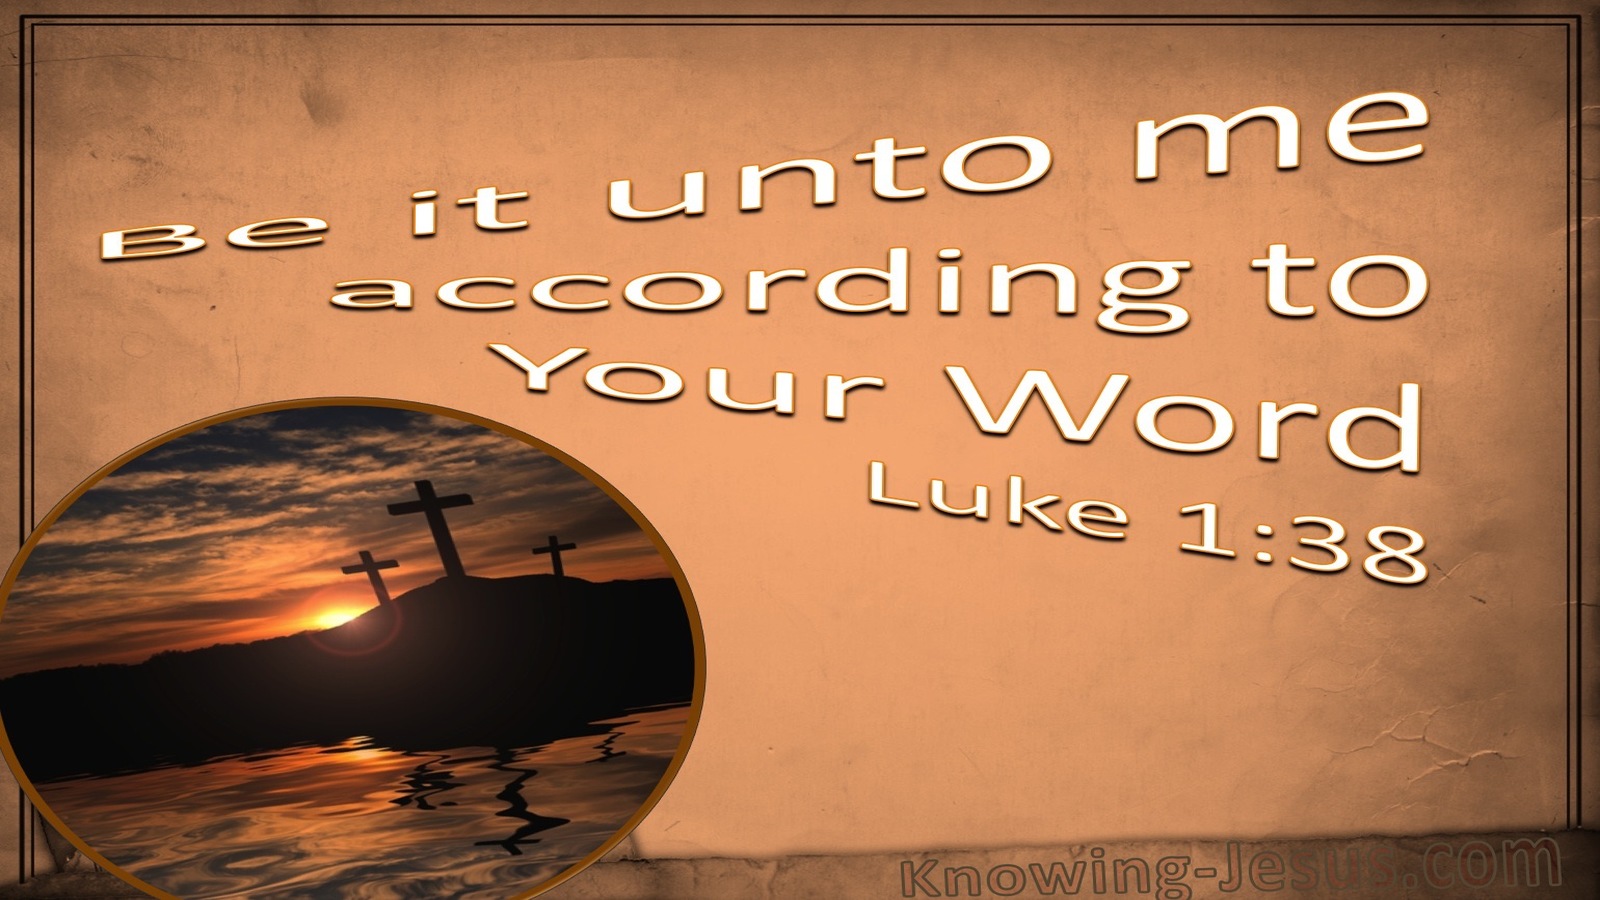 Luke 1:38 An Impossible reality (devotional)04:18 (brown)